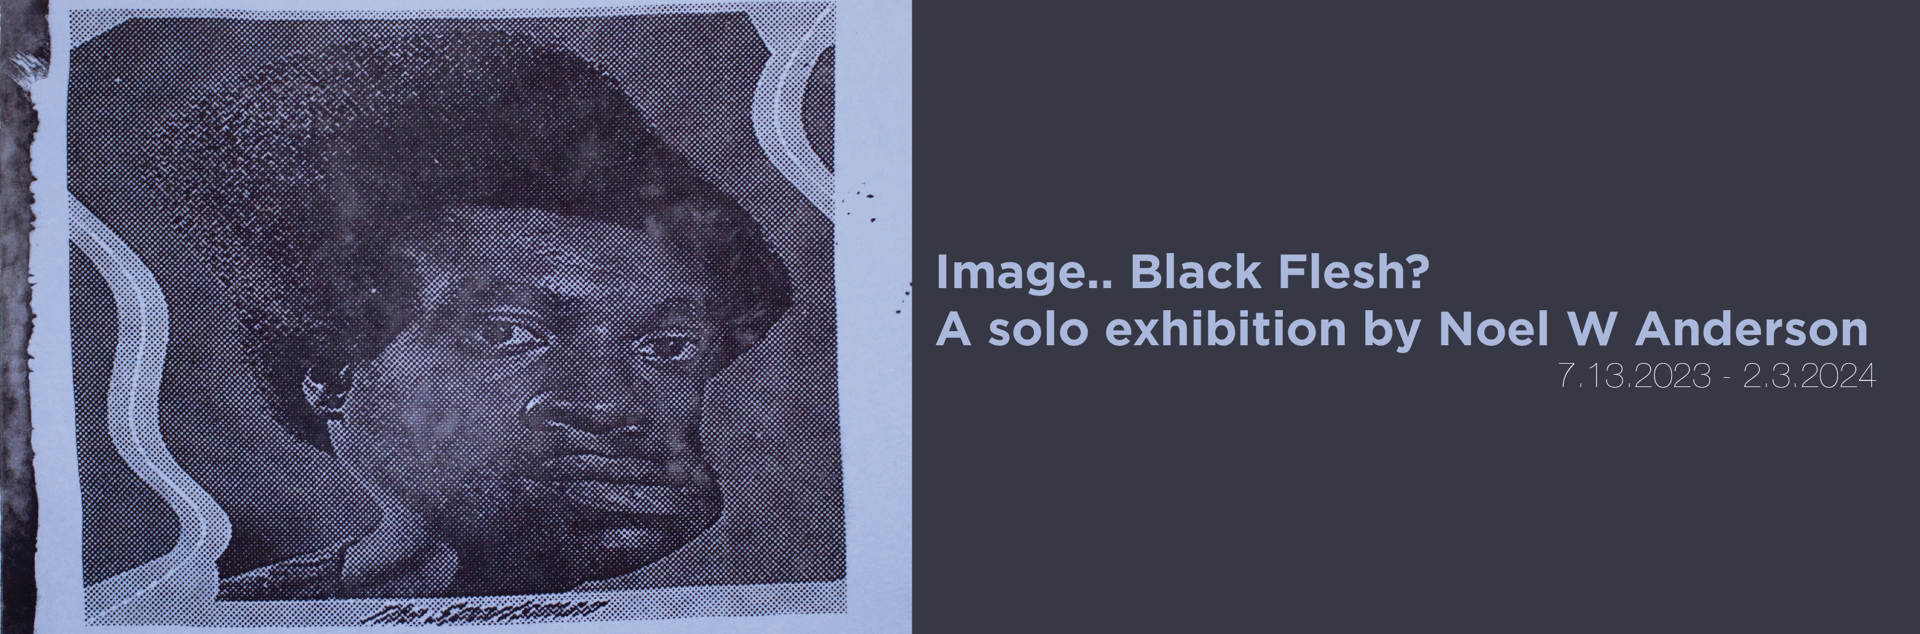 Hillliard Museum - Image.. Black Flesh? Noel W Anderson photo